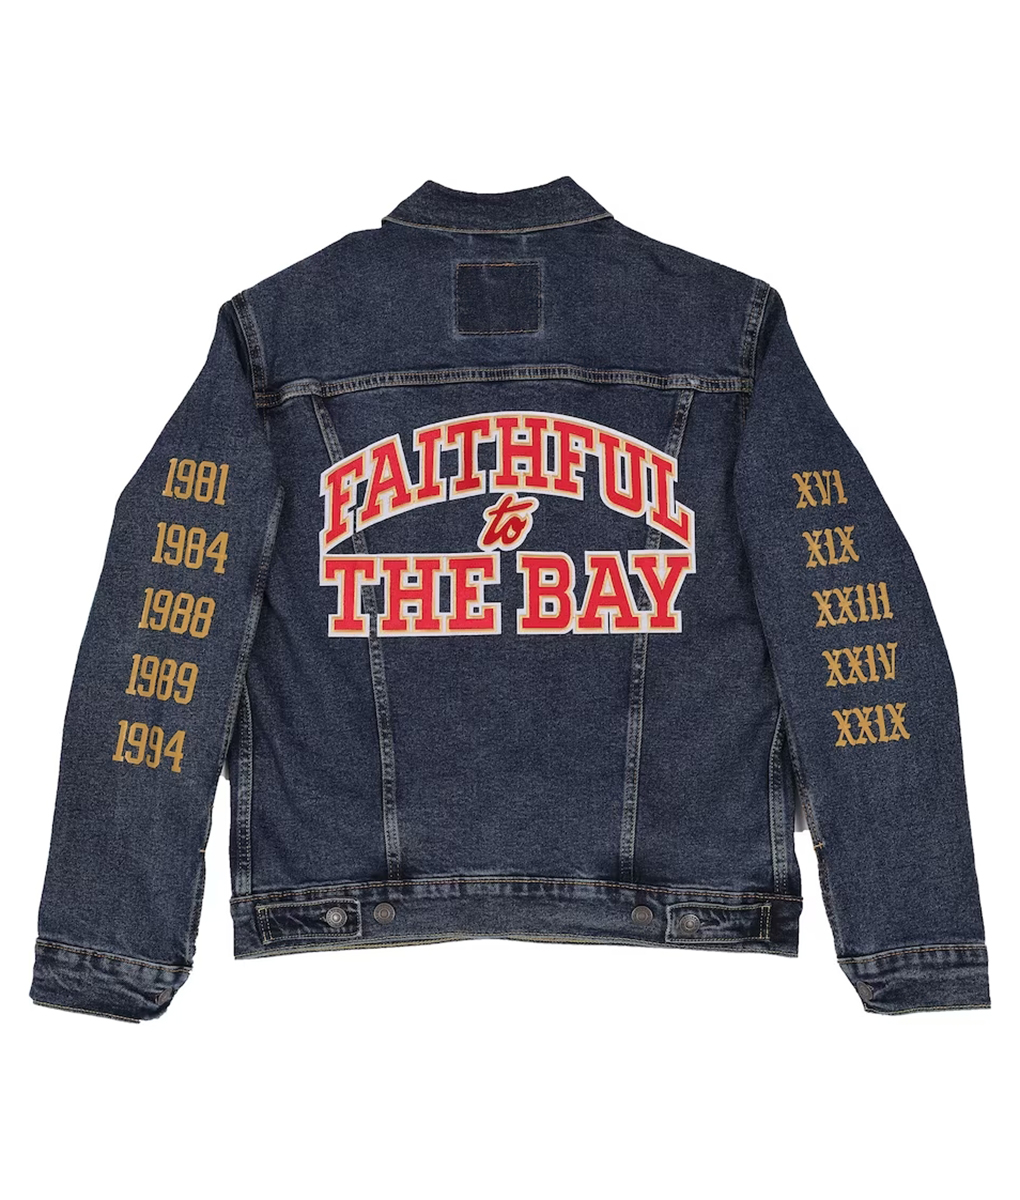 SF 49ers Faithful To The Bay Blue Denim Jacket (1)